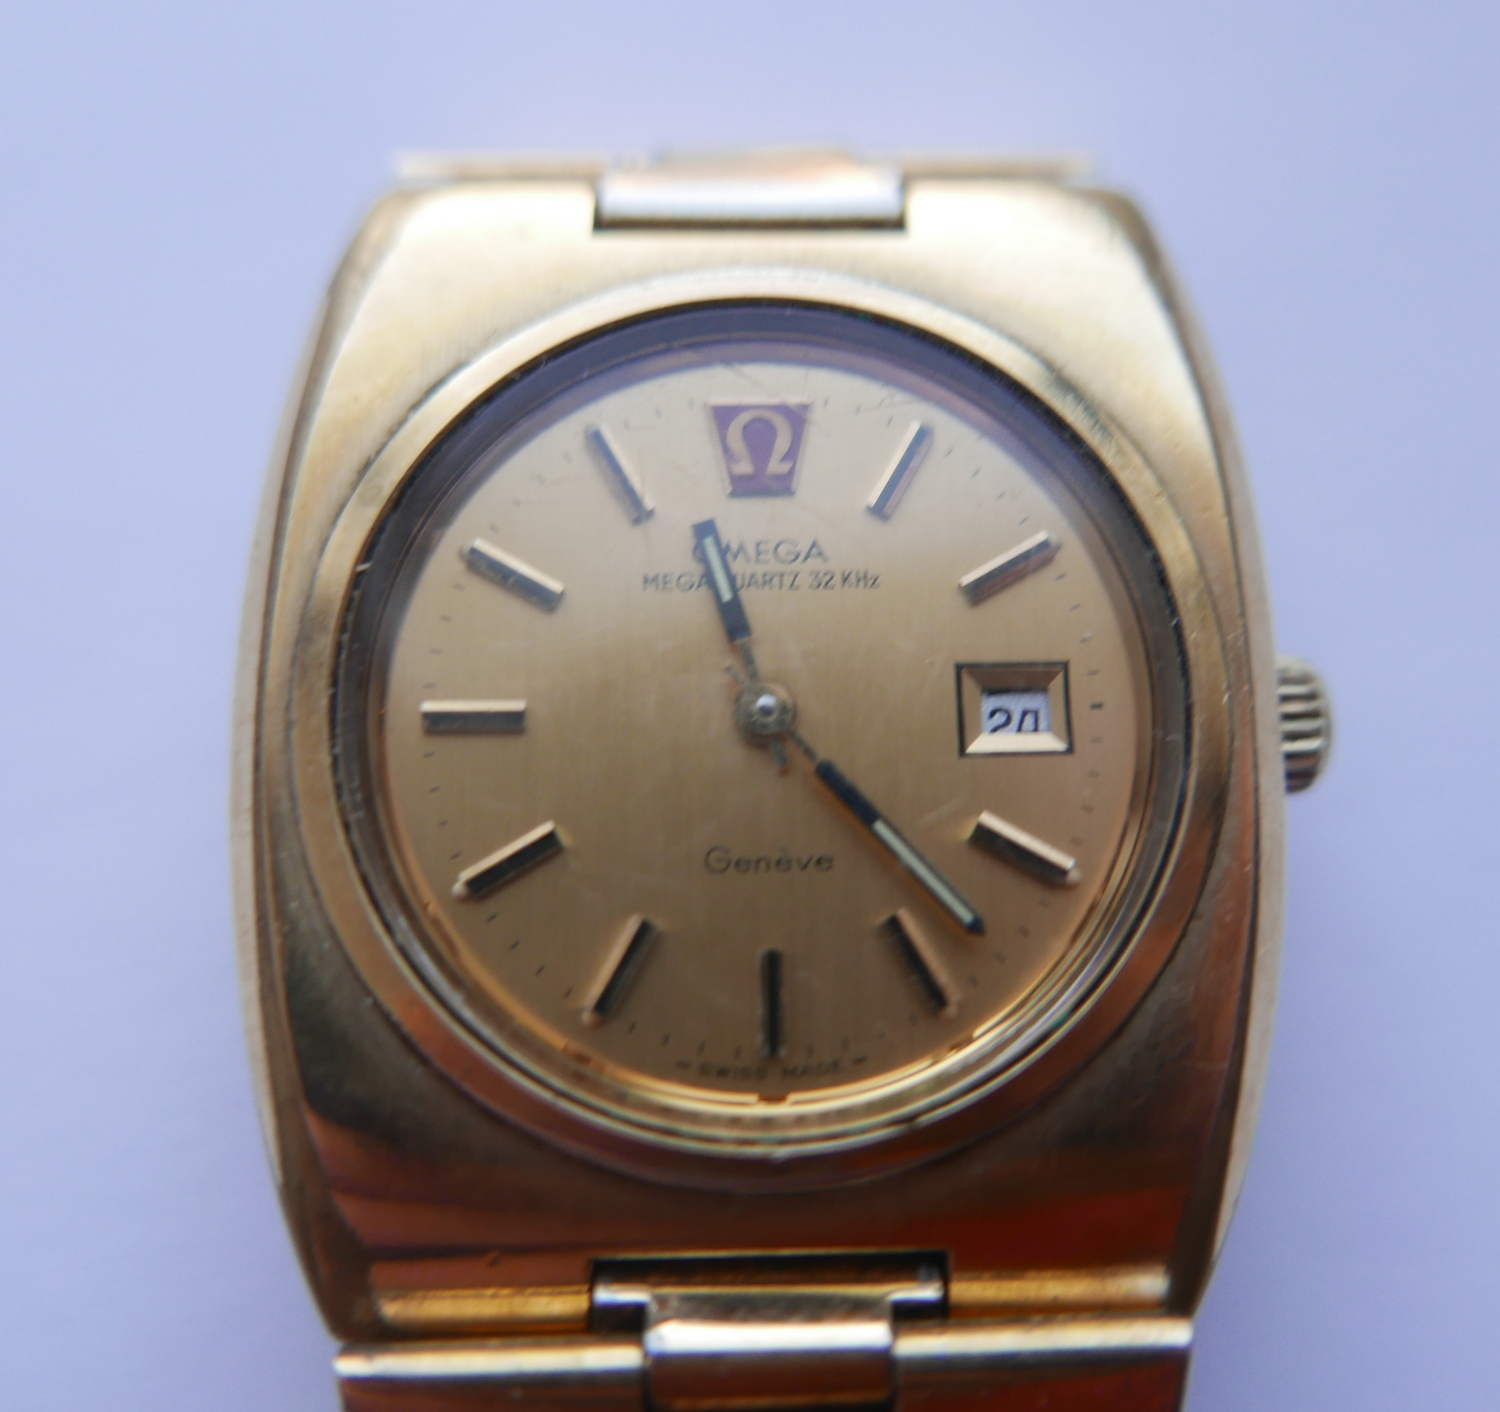 Vintage Gold Plated Omega Geneve Megaquartz Mid Size Watch. - Image 2 of 3